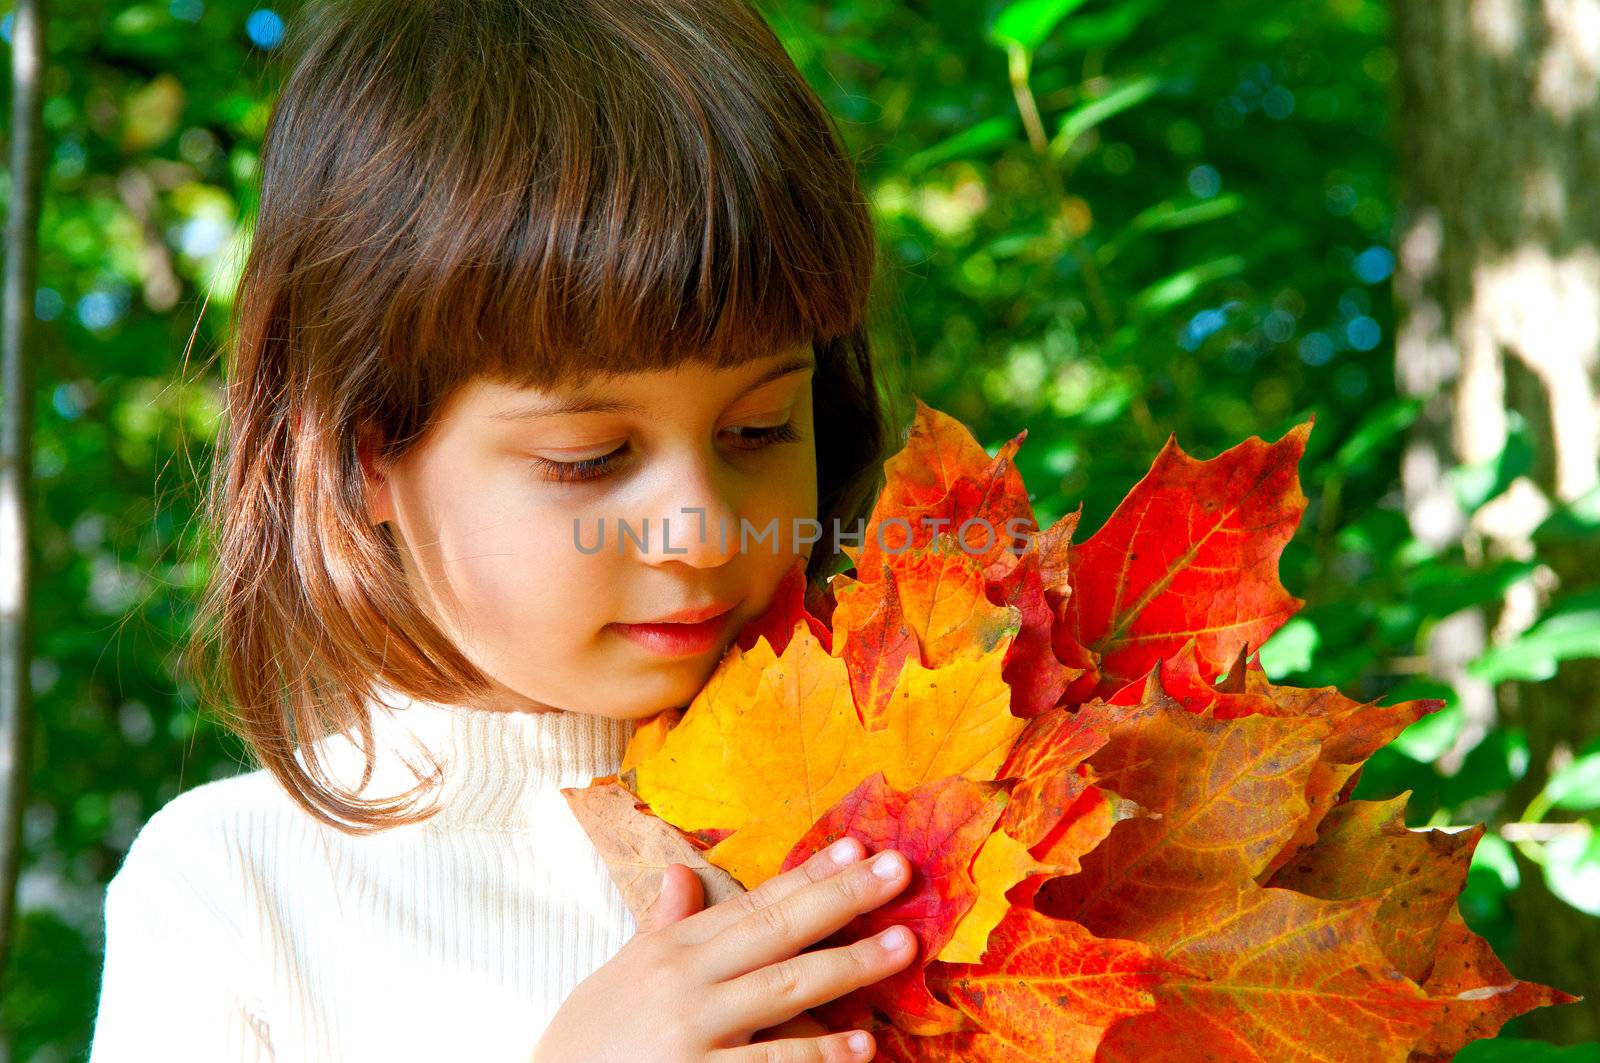 Autumn maple leaves.jpg by ben44